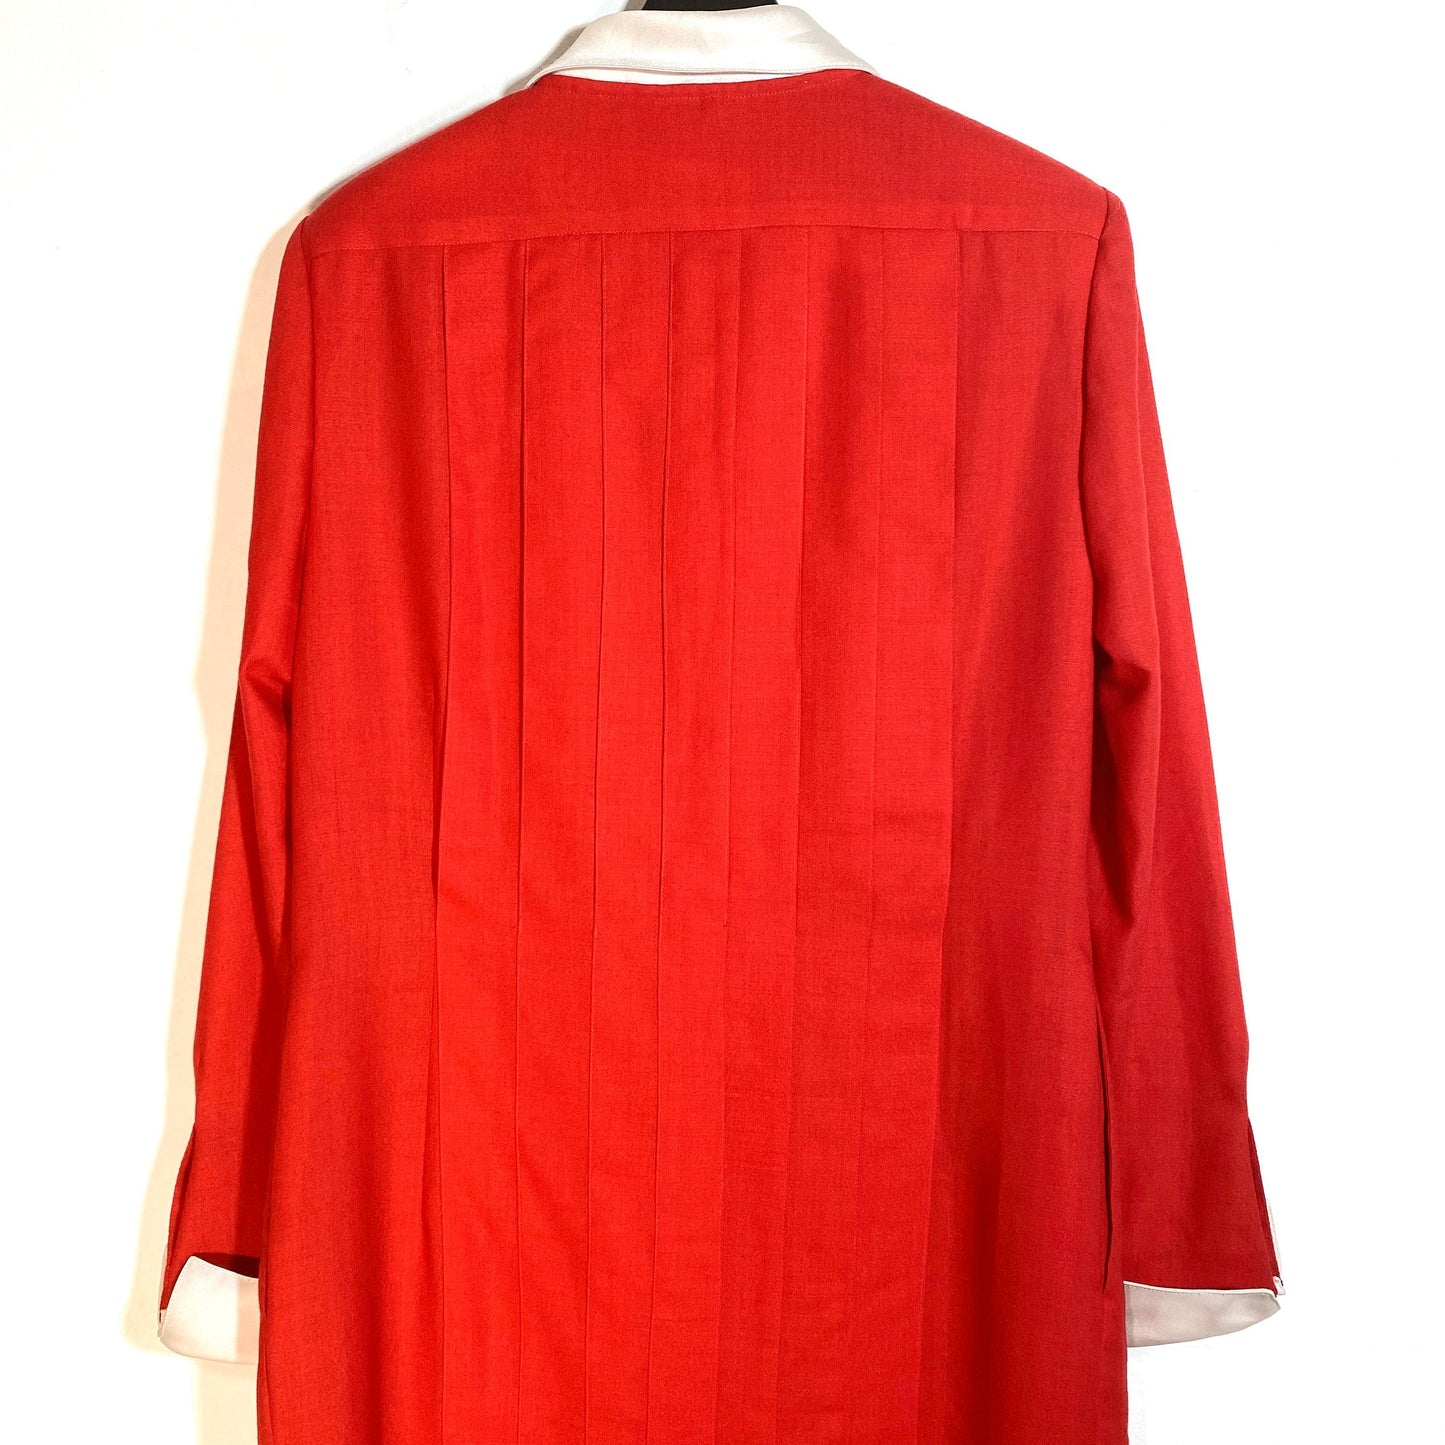 Guidotti luxury sportswear 1970s red shirt dress, school dress, wonderful light and fresh cotton, NOS